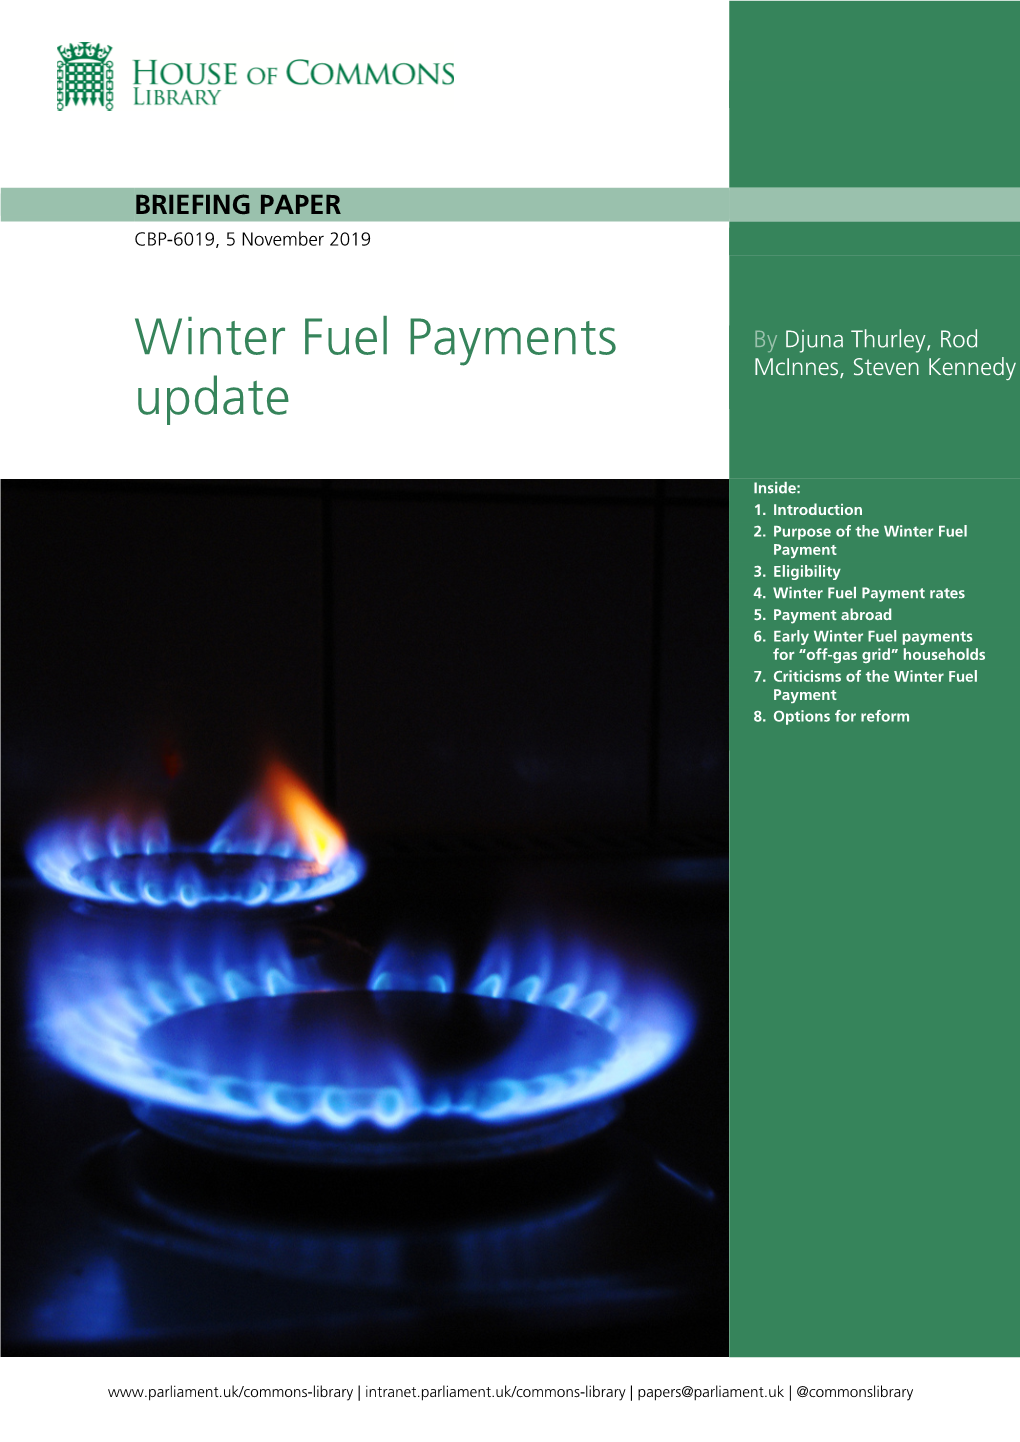 Winter Fuel Payments Update